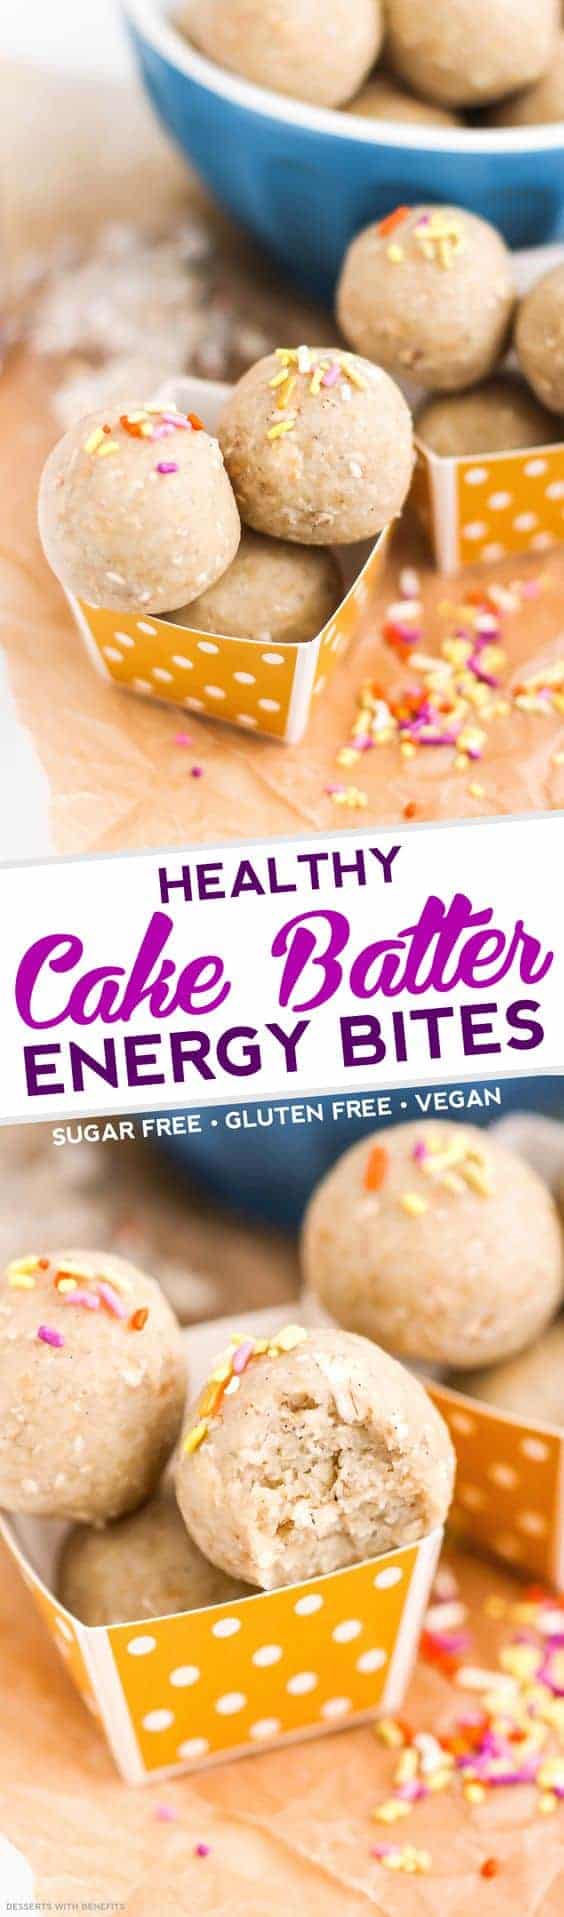 A Pinterest image for healthy cake batter energy bites